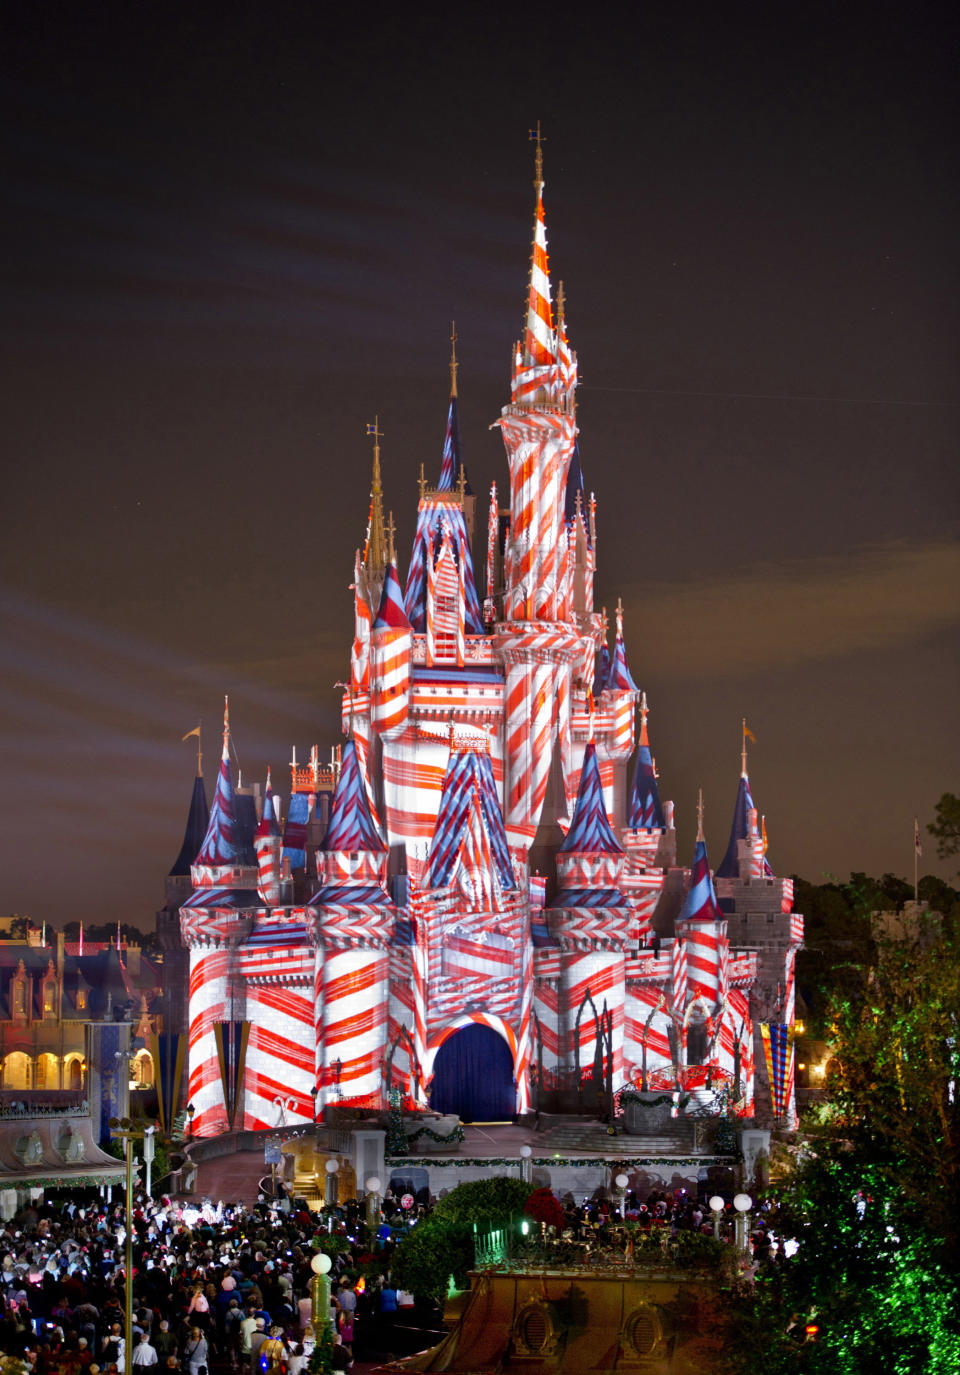 Cinderella Castle At Disney World Gets Into The Holiday Spirit